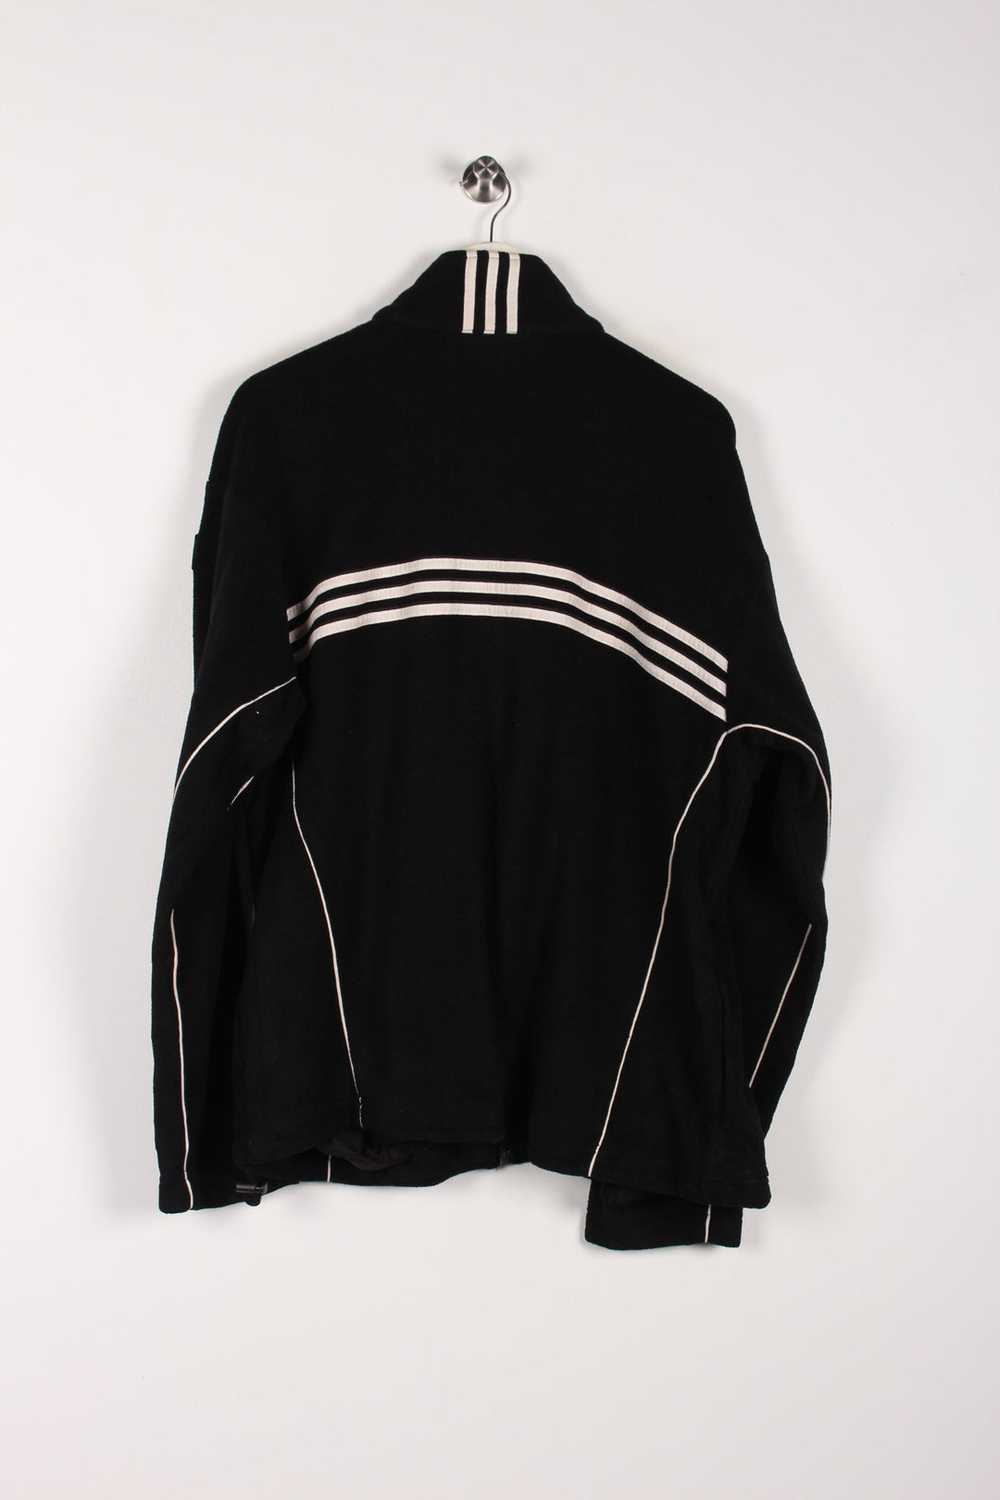 90's Adidas Fleece Black Large - image 3